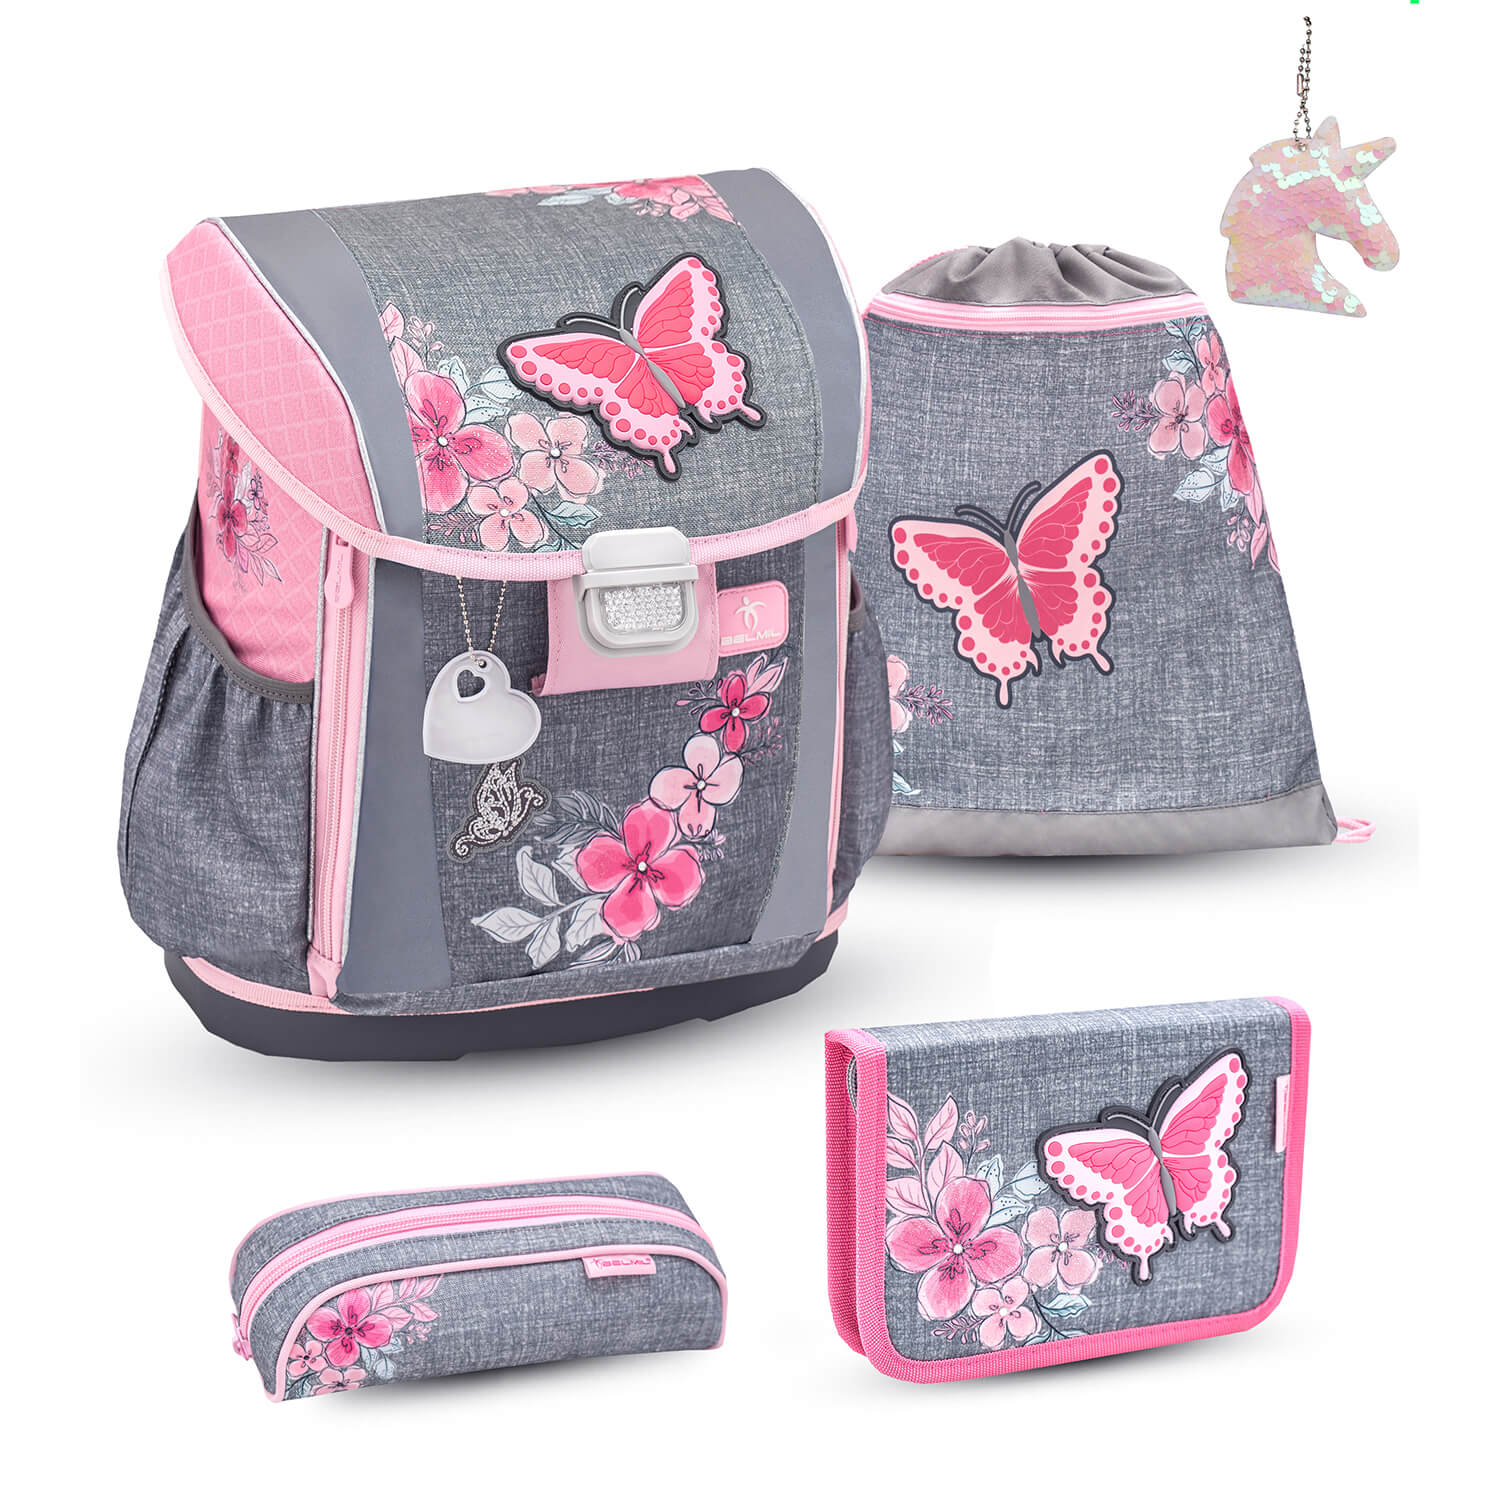 Customize Me Elegant schoolbag set 5 pcs with GRATIS keychain